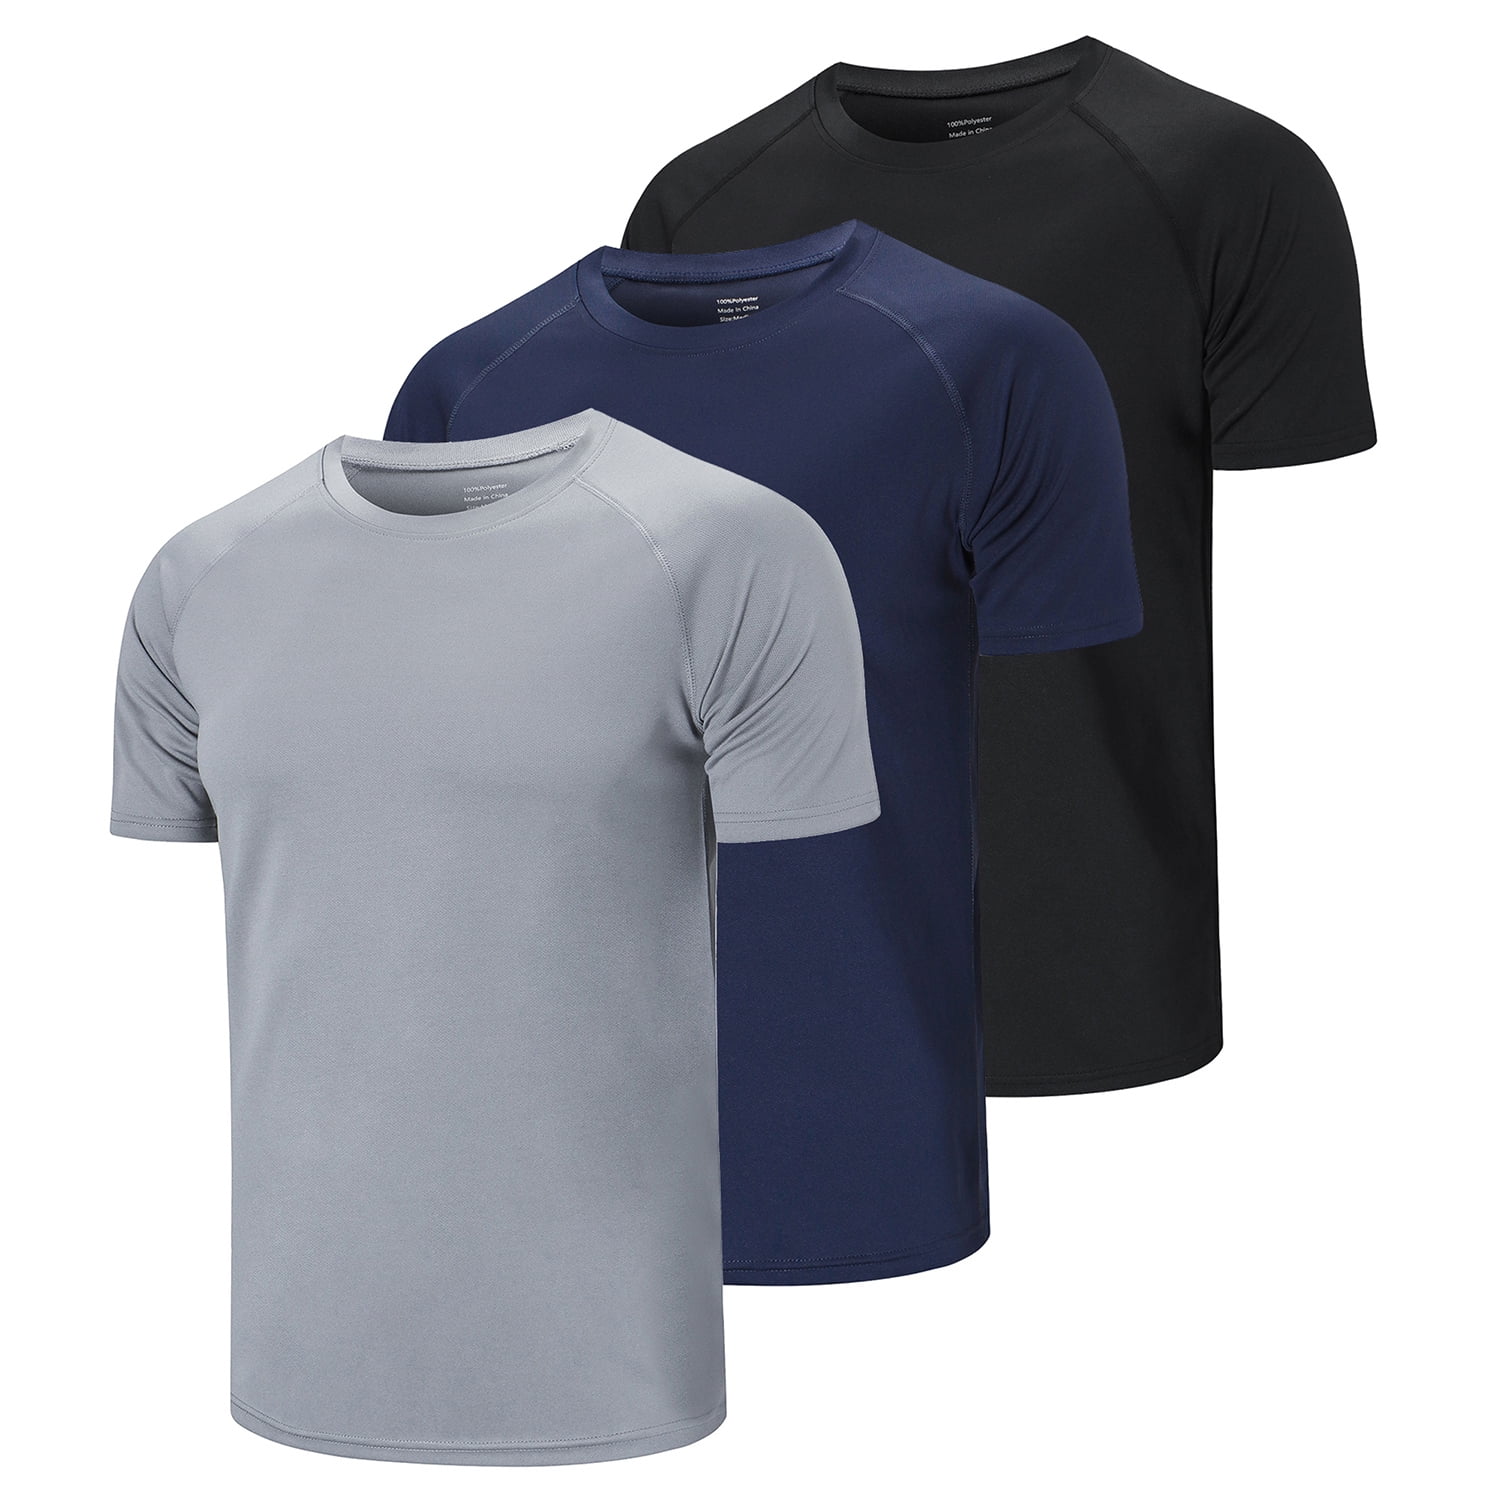 ZENGVEE Workout Shirts for Men, 3 Pack Mens Crew Neck Casual Gym Shirts ...